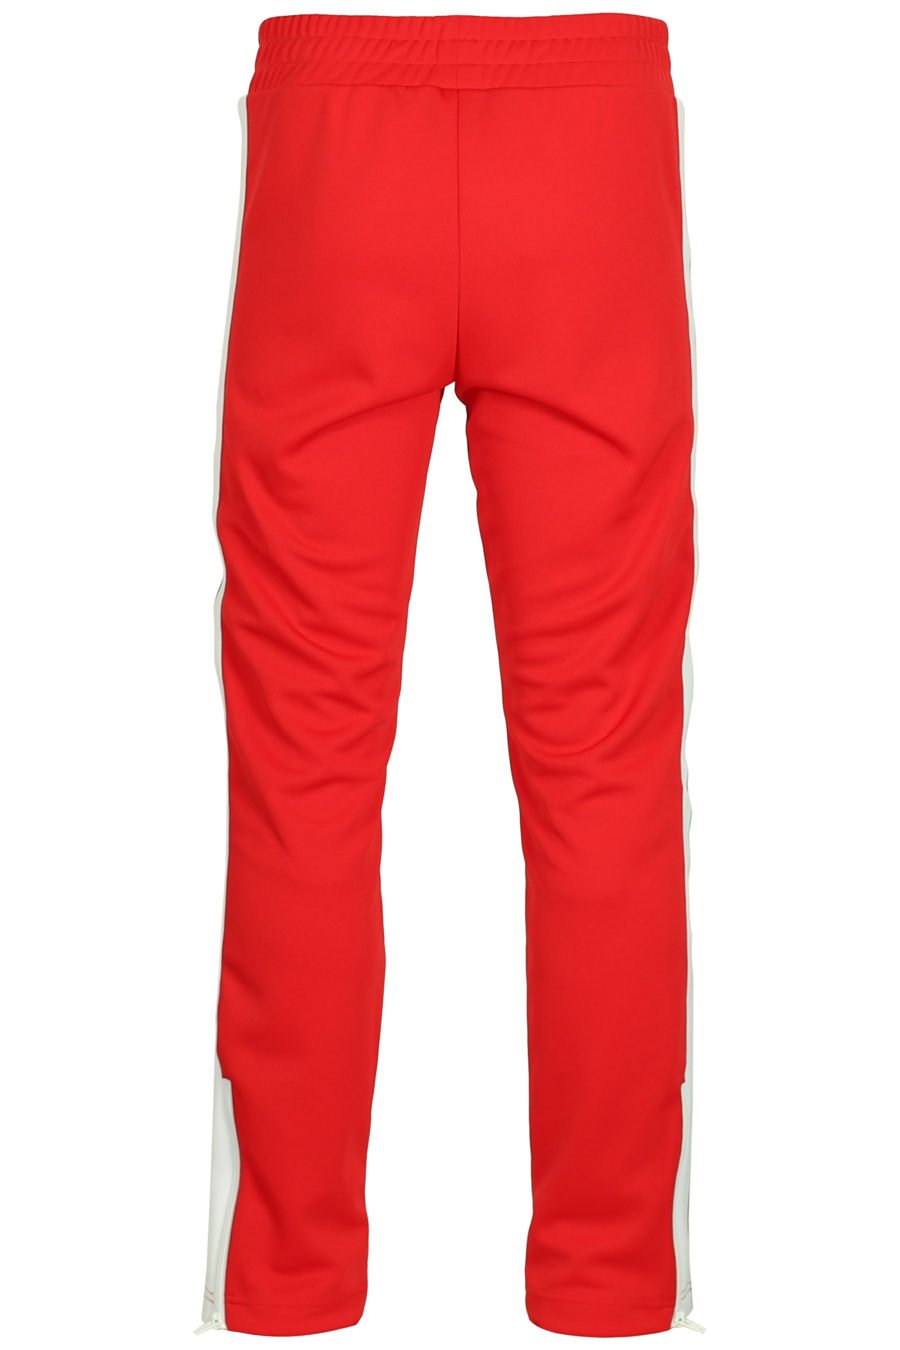 Pantalón rojo con logotipo y rayas laterales - IMG 3768